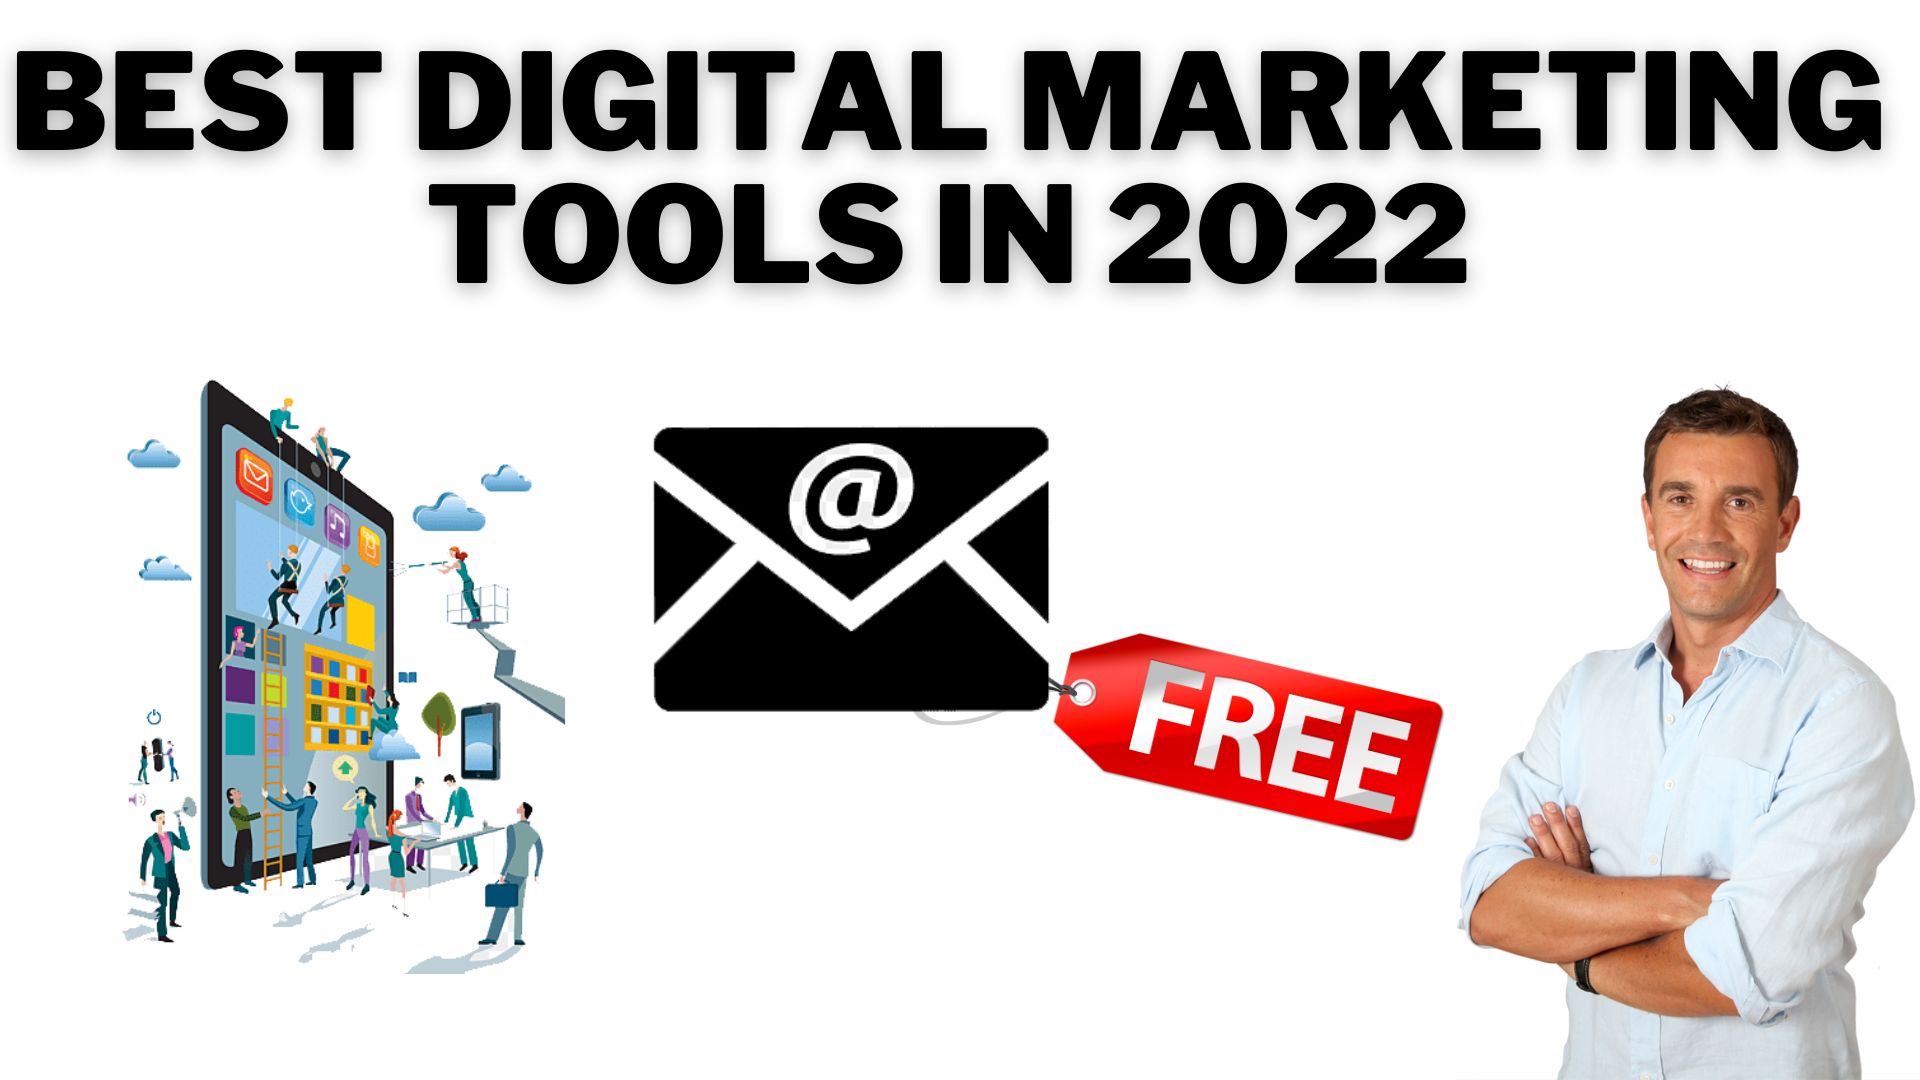 Best digital marketing tools in 2022